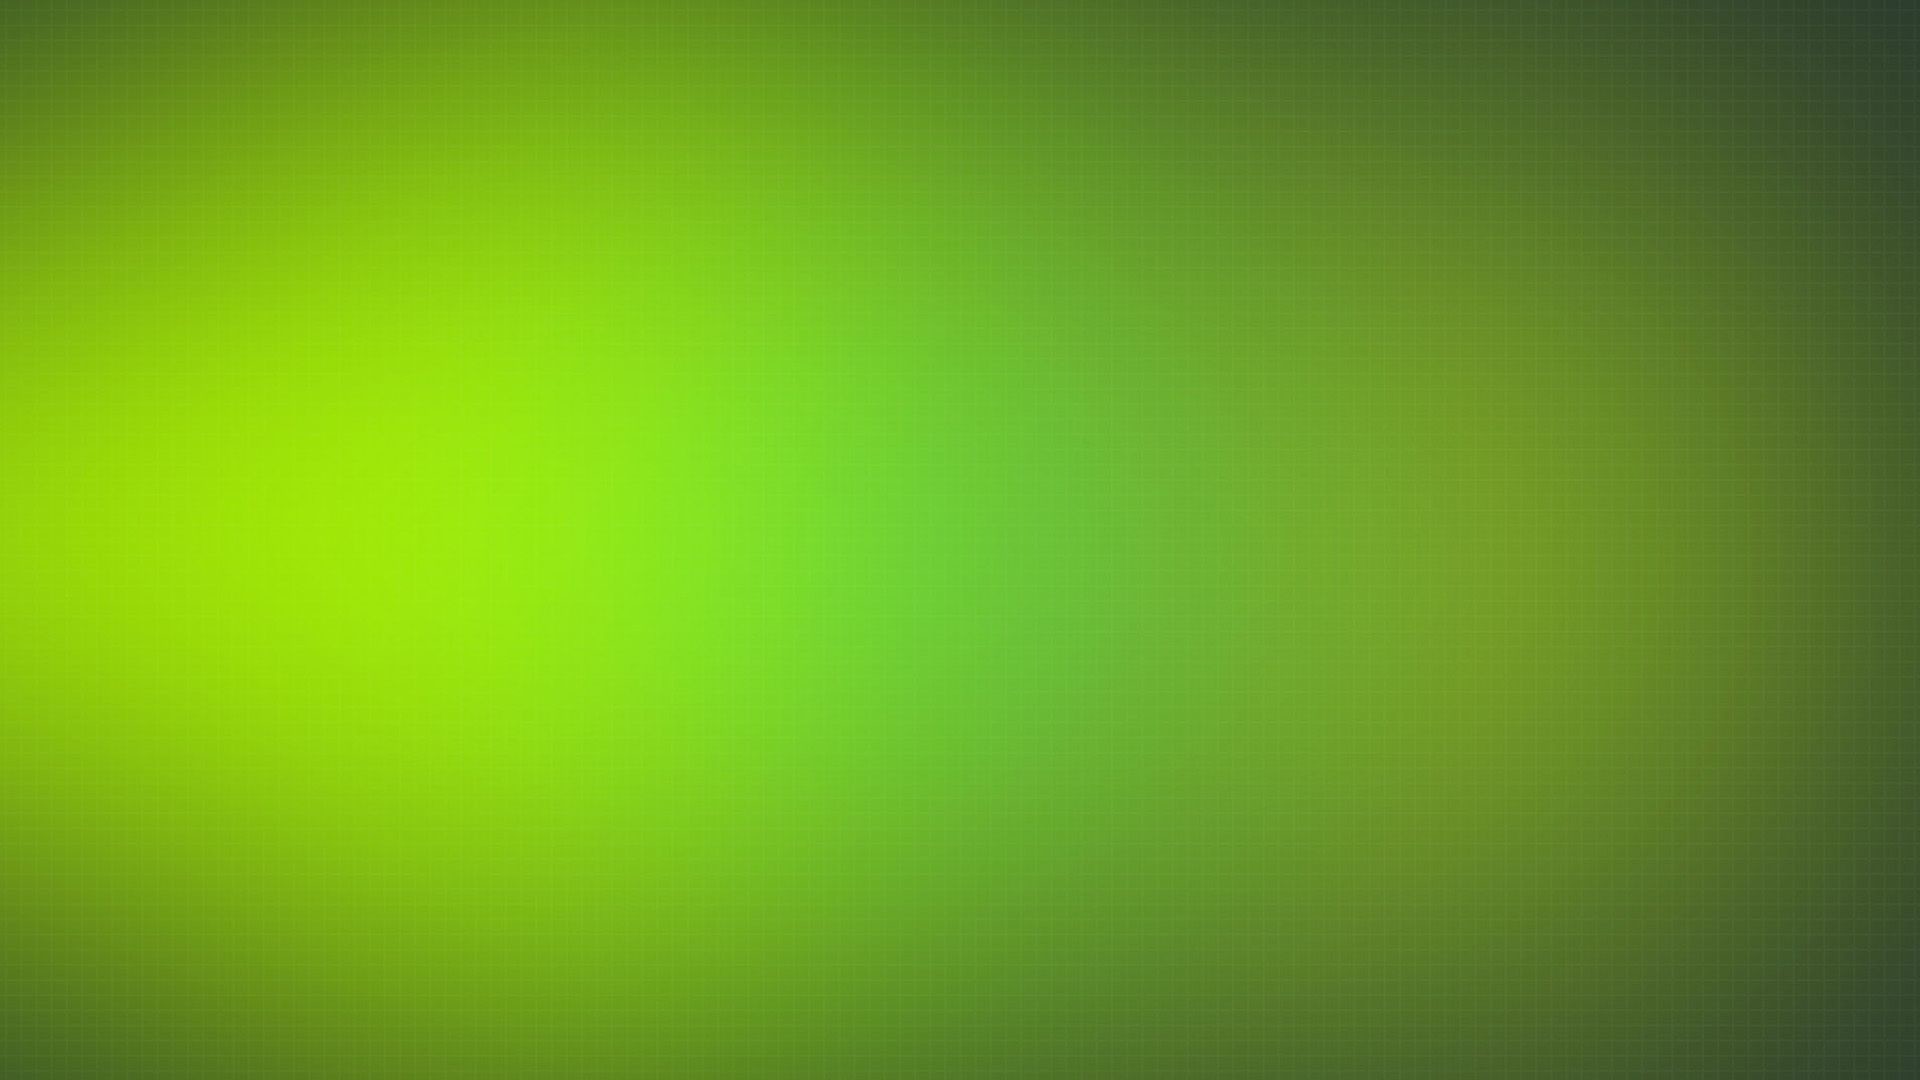 1920x1080 Green gradient background wallpaper